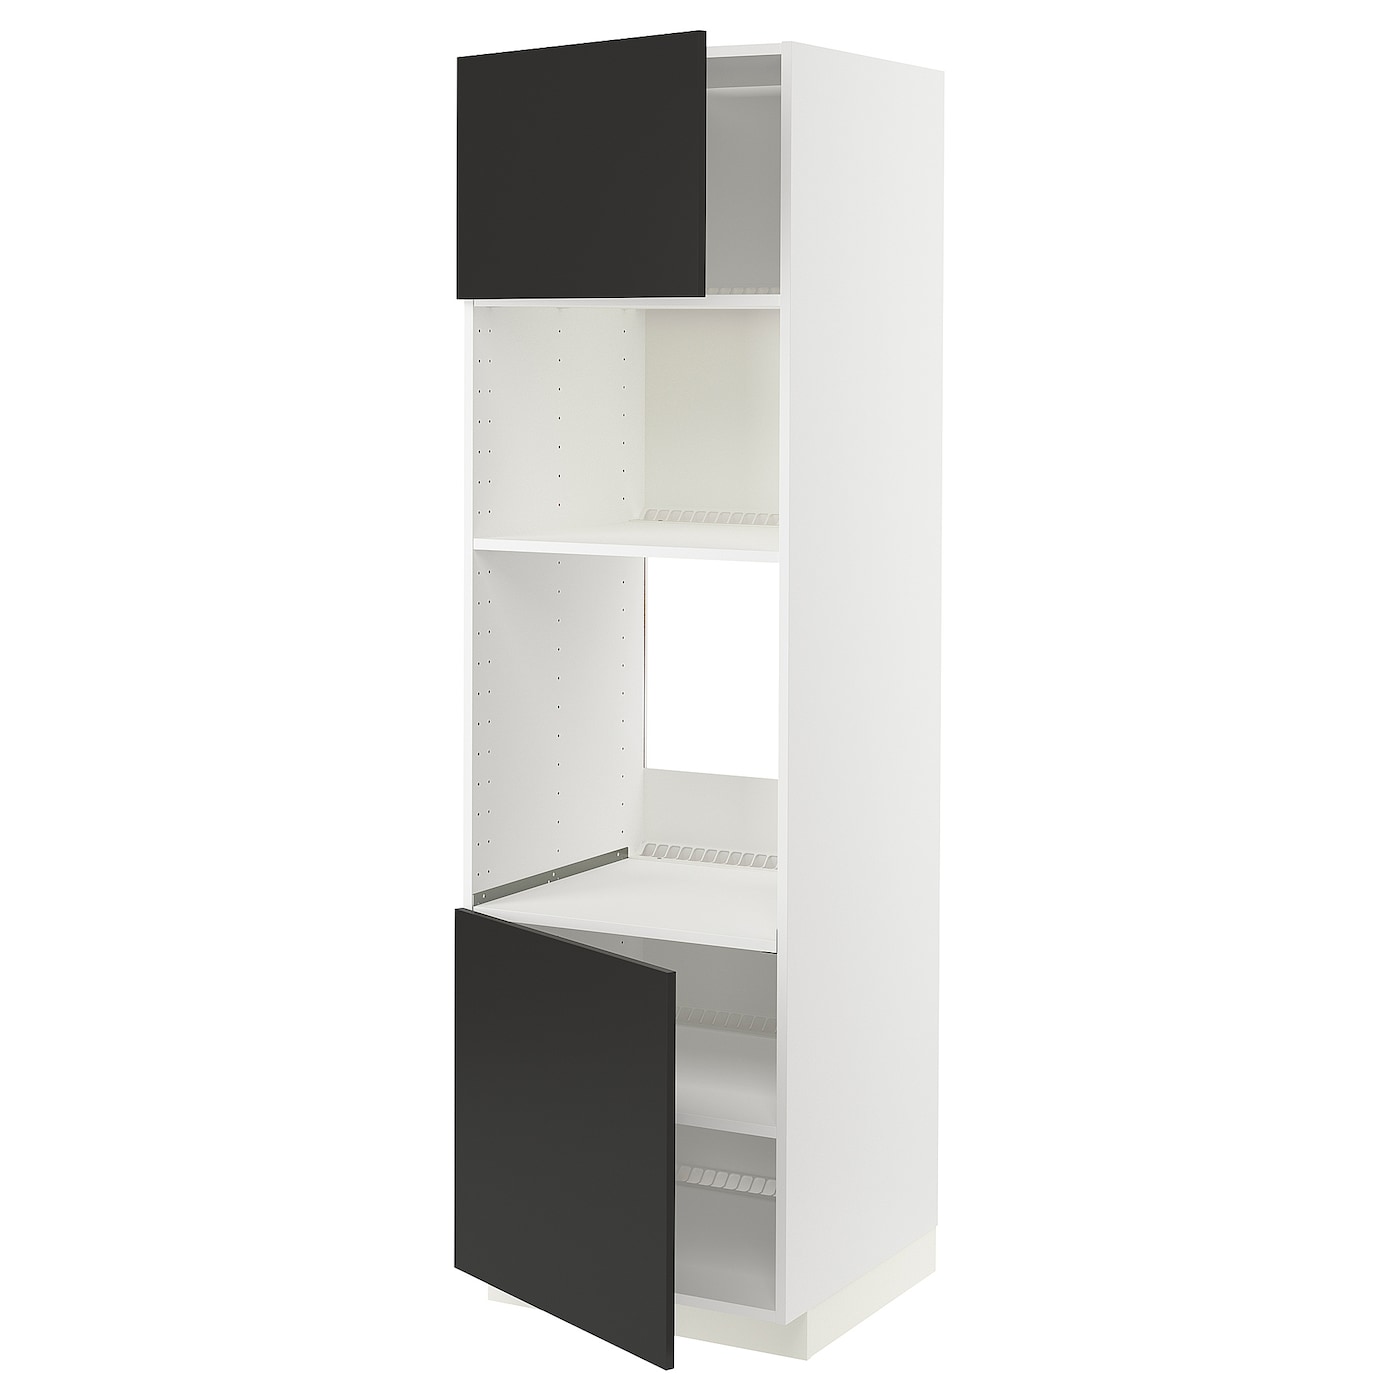 Кухонный шкаф-пенал - IKEA METOD/МЕТОД ИКЕА, 200х60х60 см, белый/черный